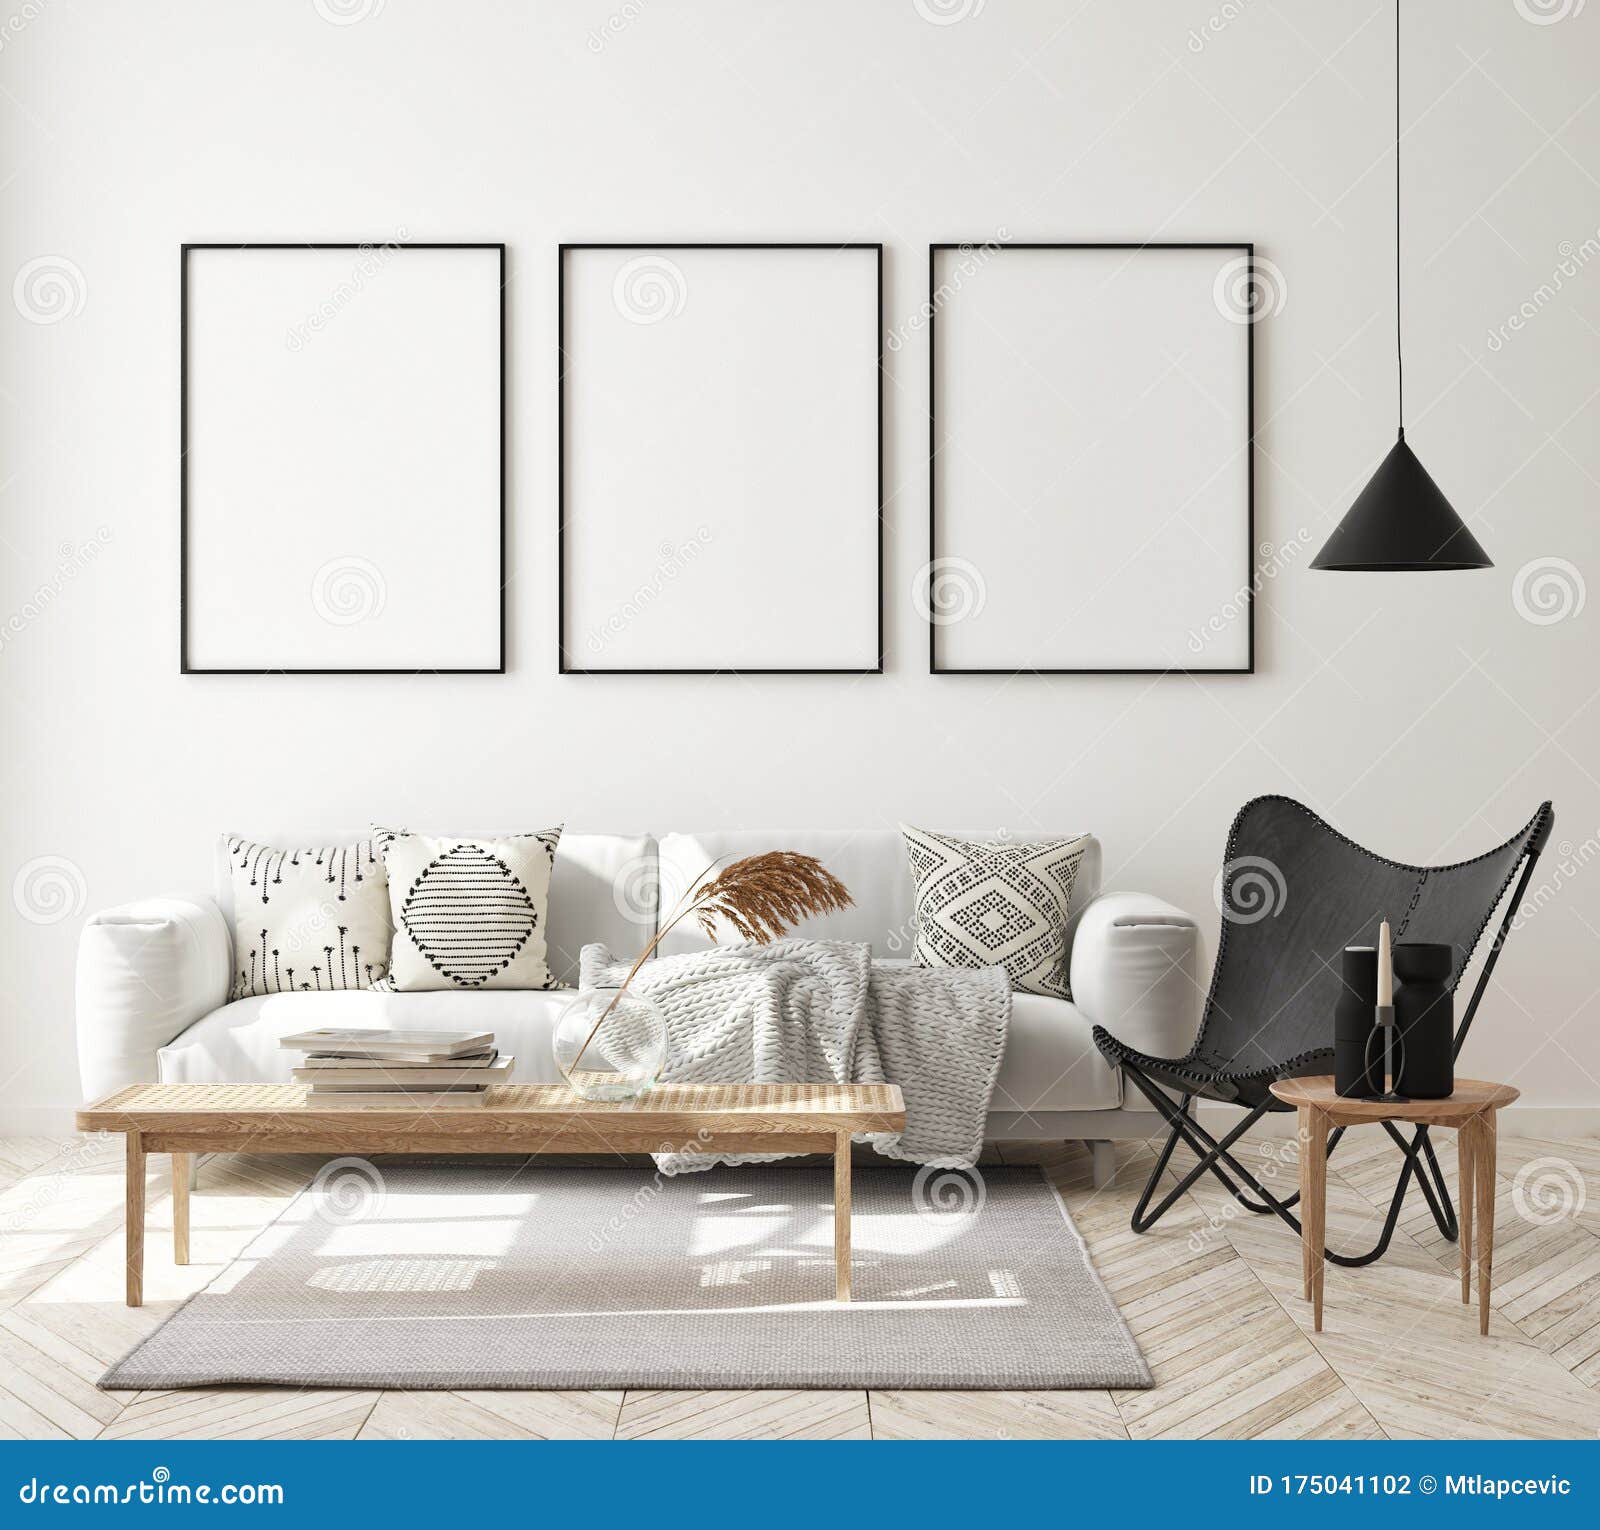 mock up poster frame in modern interior background, livingroom, scandinavian style, 3d render